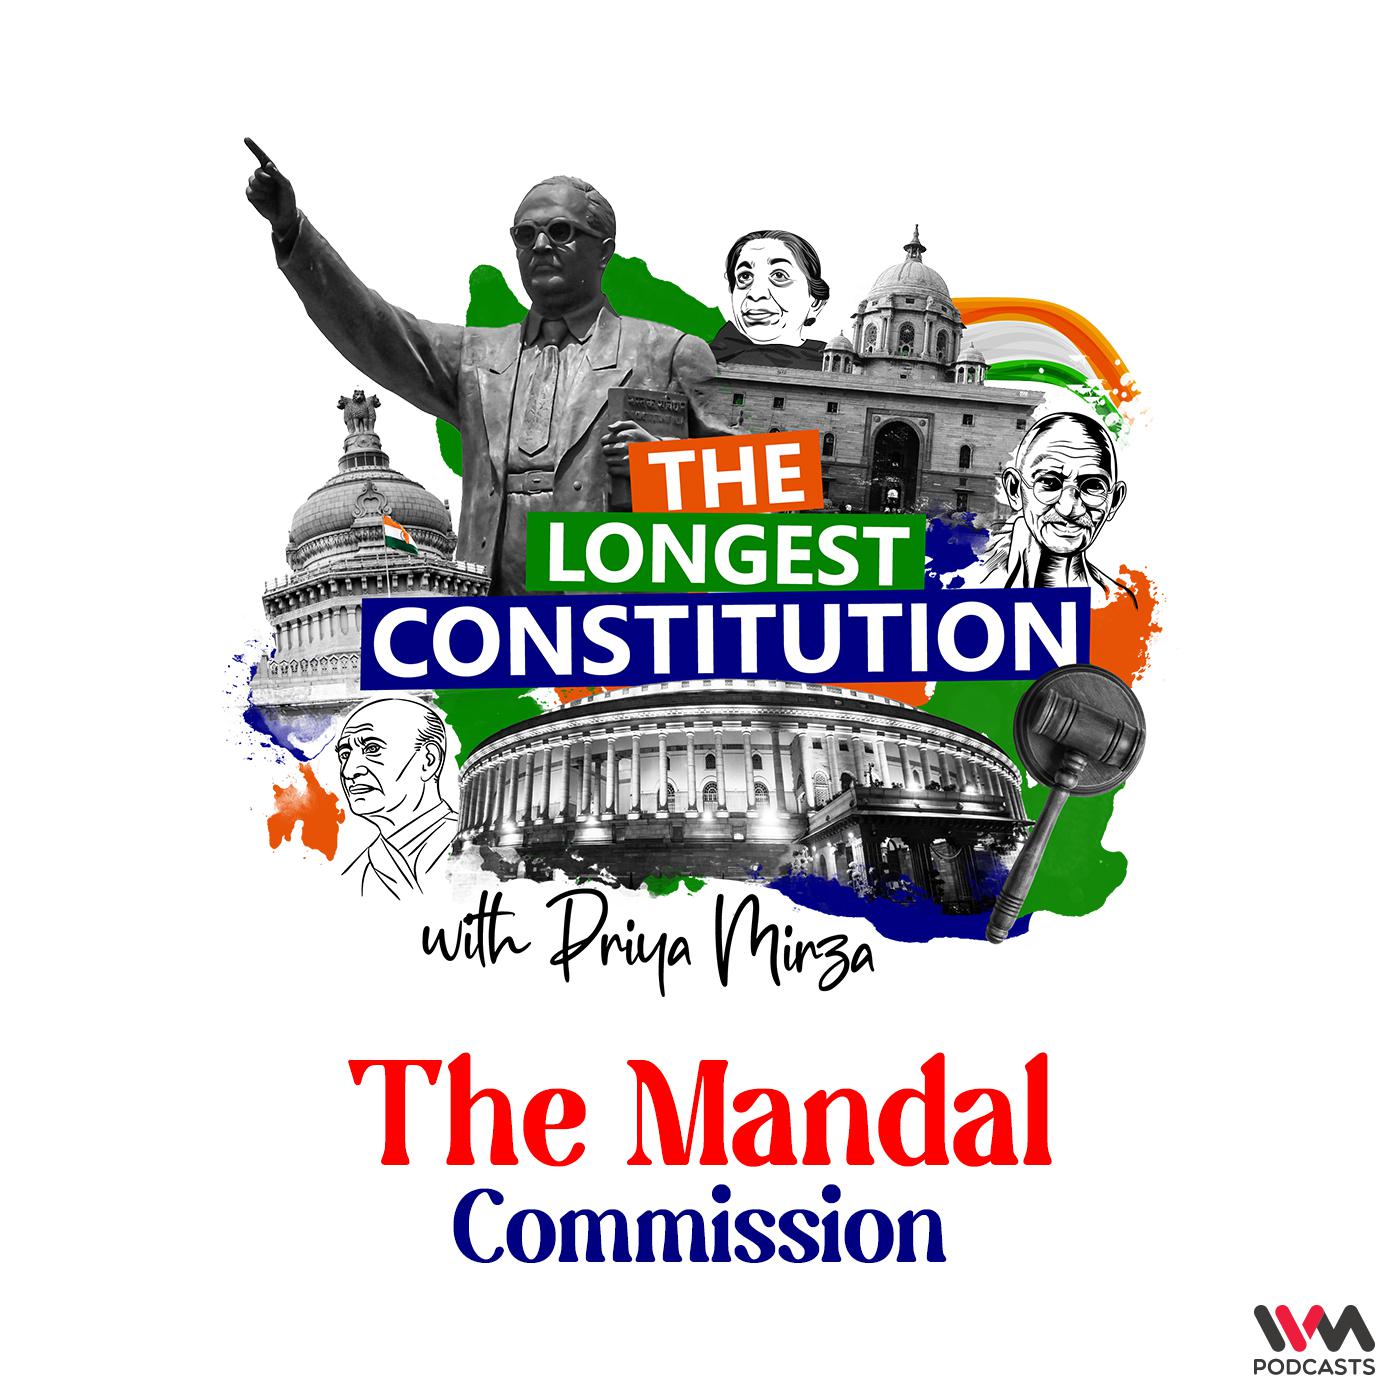 The Mandal Commission